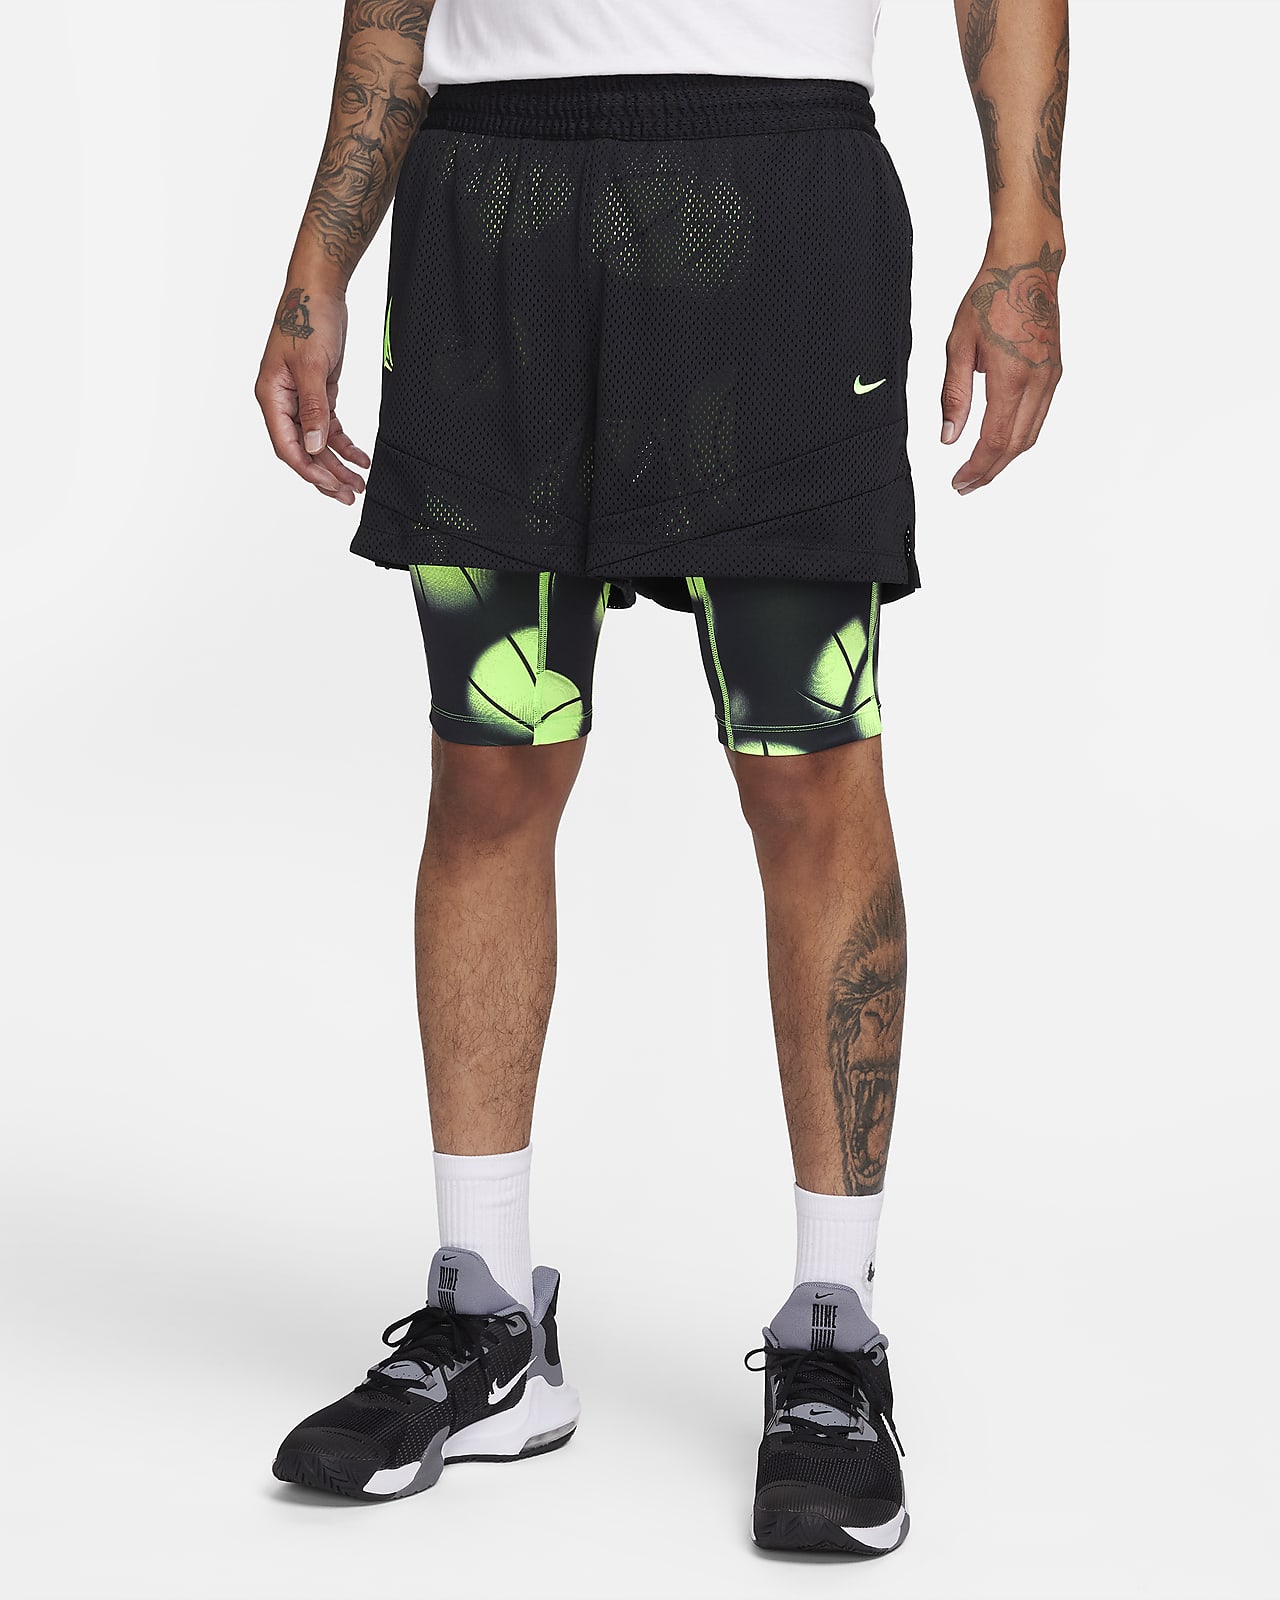 Ja Pantalón corto de baloncesto Dri-FIT 2 en 1 de 10 cm - Hombre